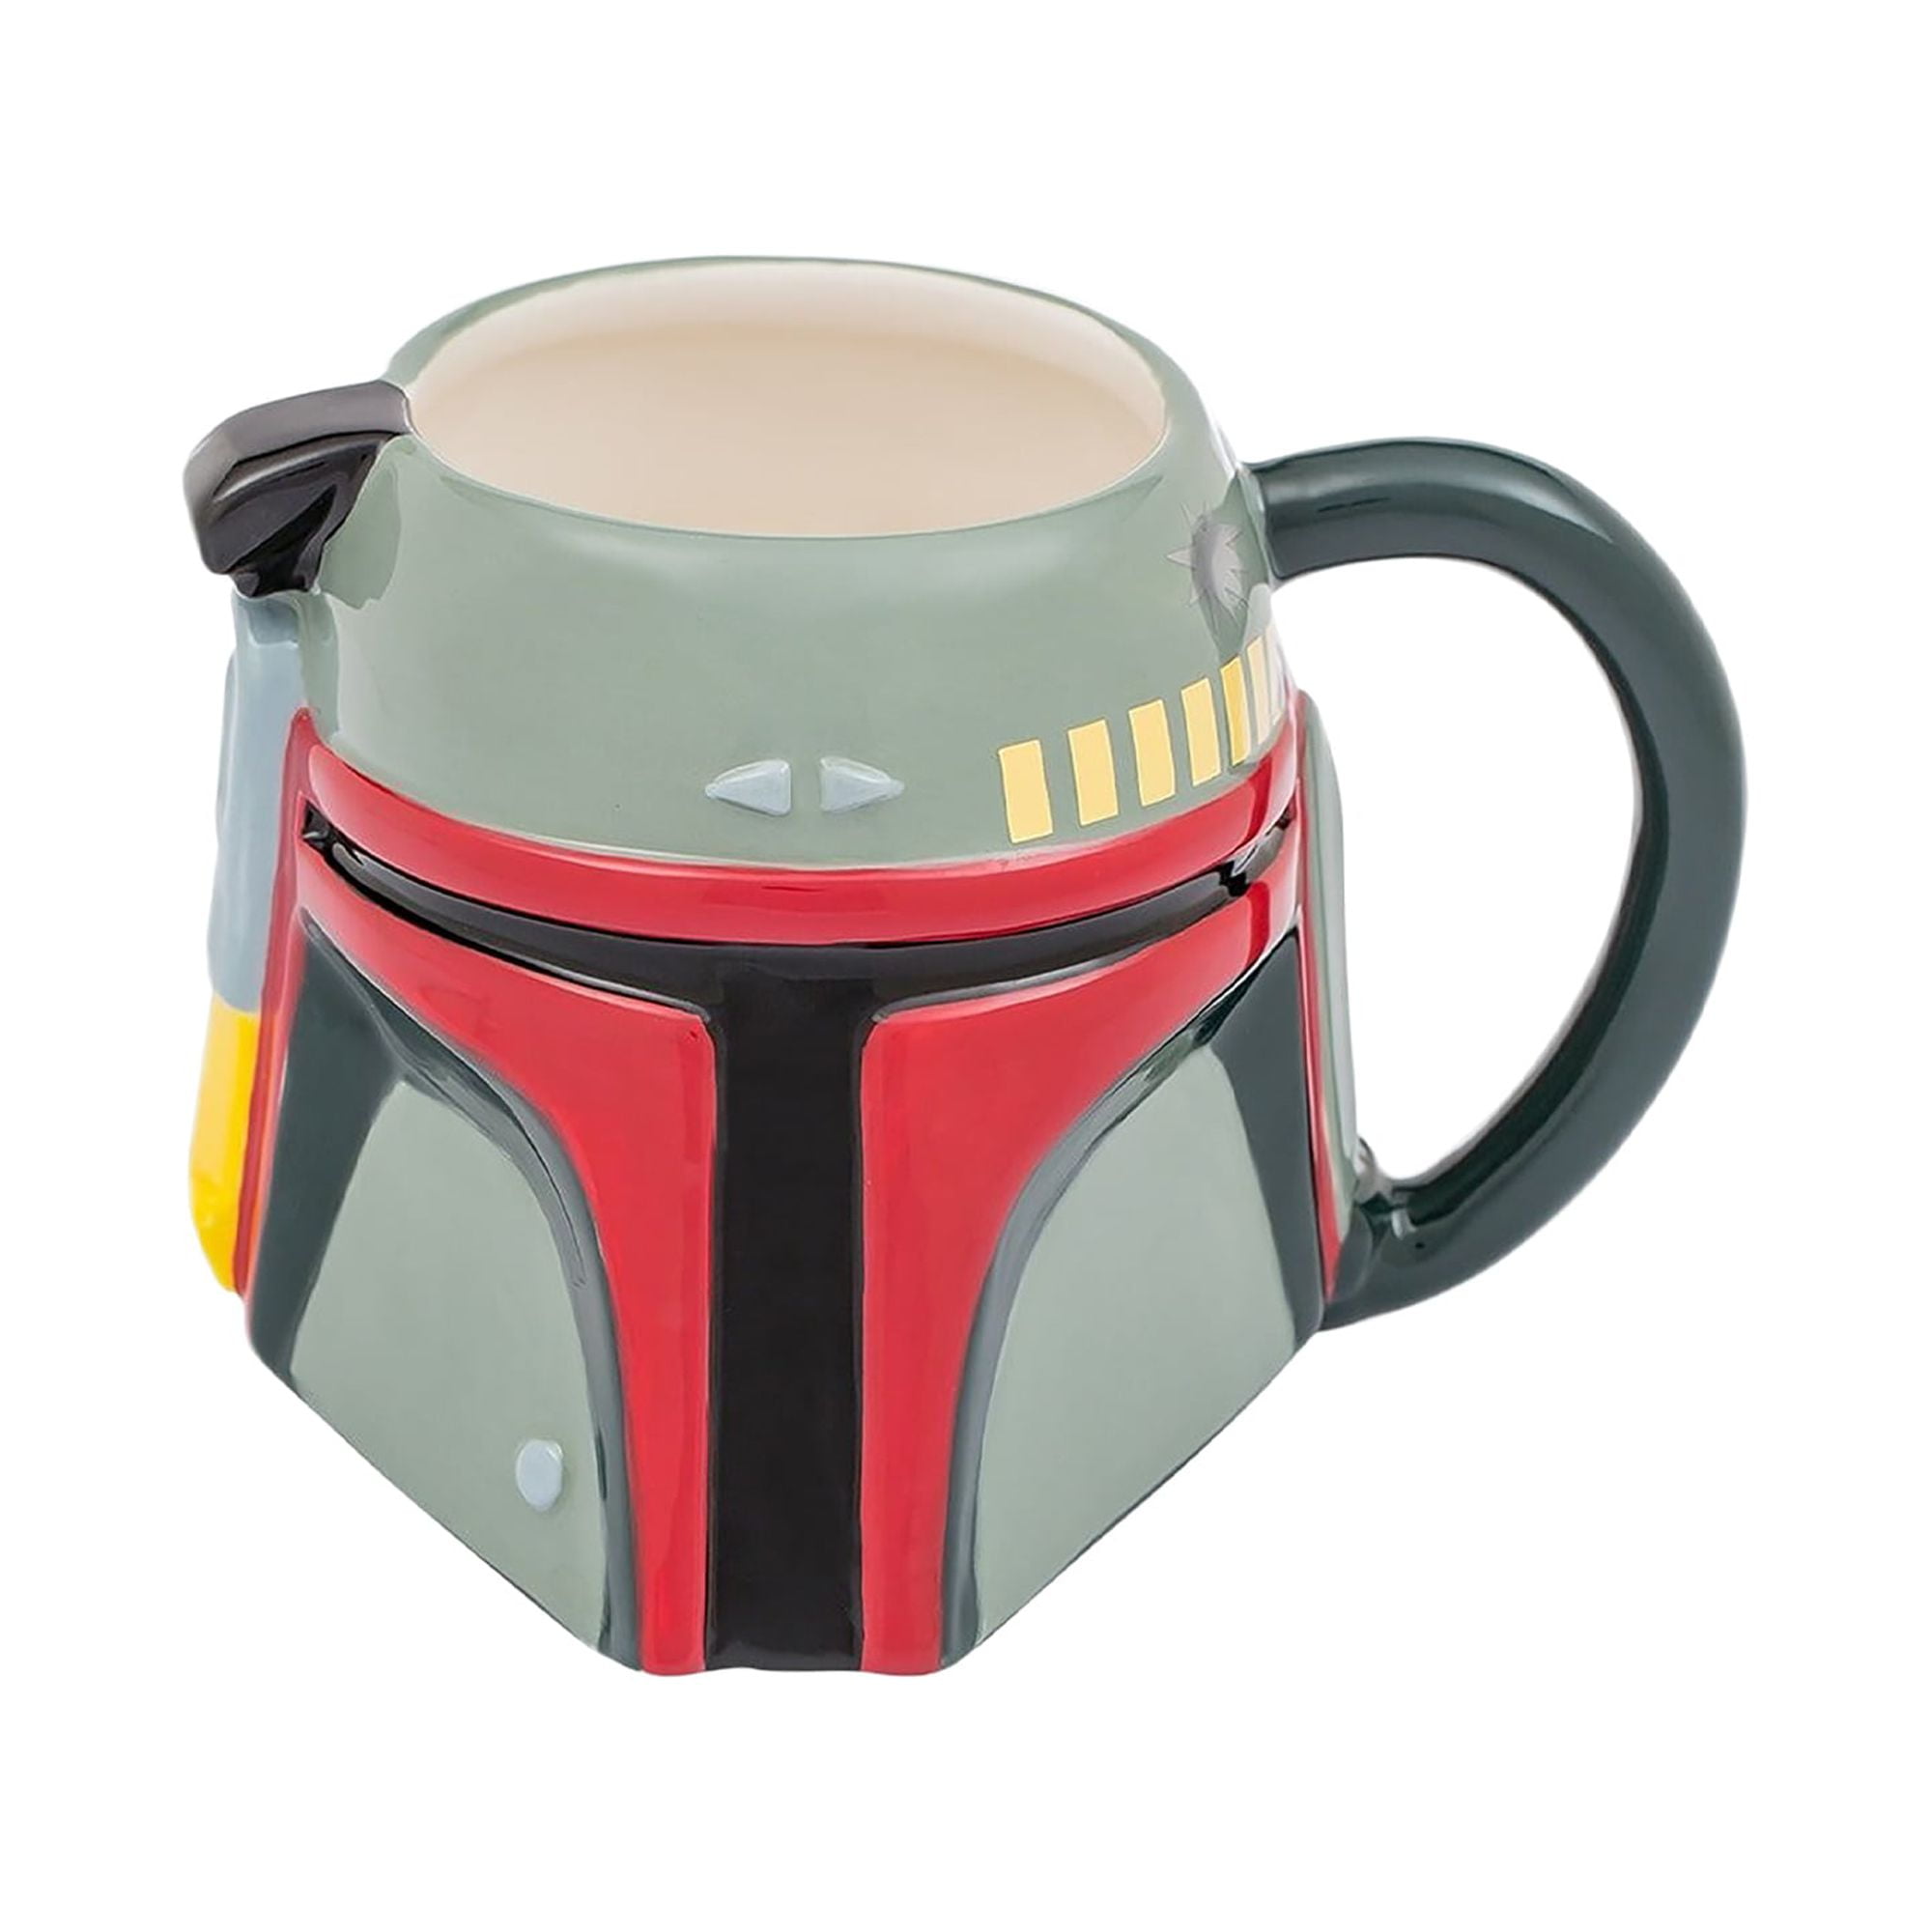 Star Wars The Mandalorian Grogu Mug Warmer Set - Uncanny Brands